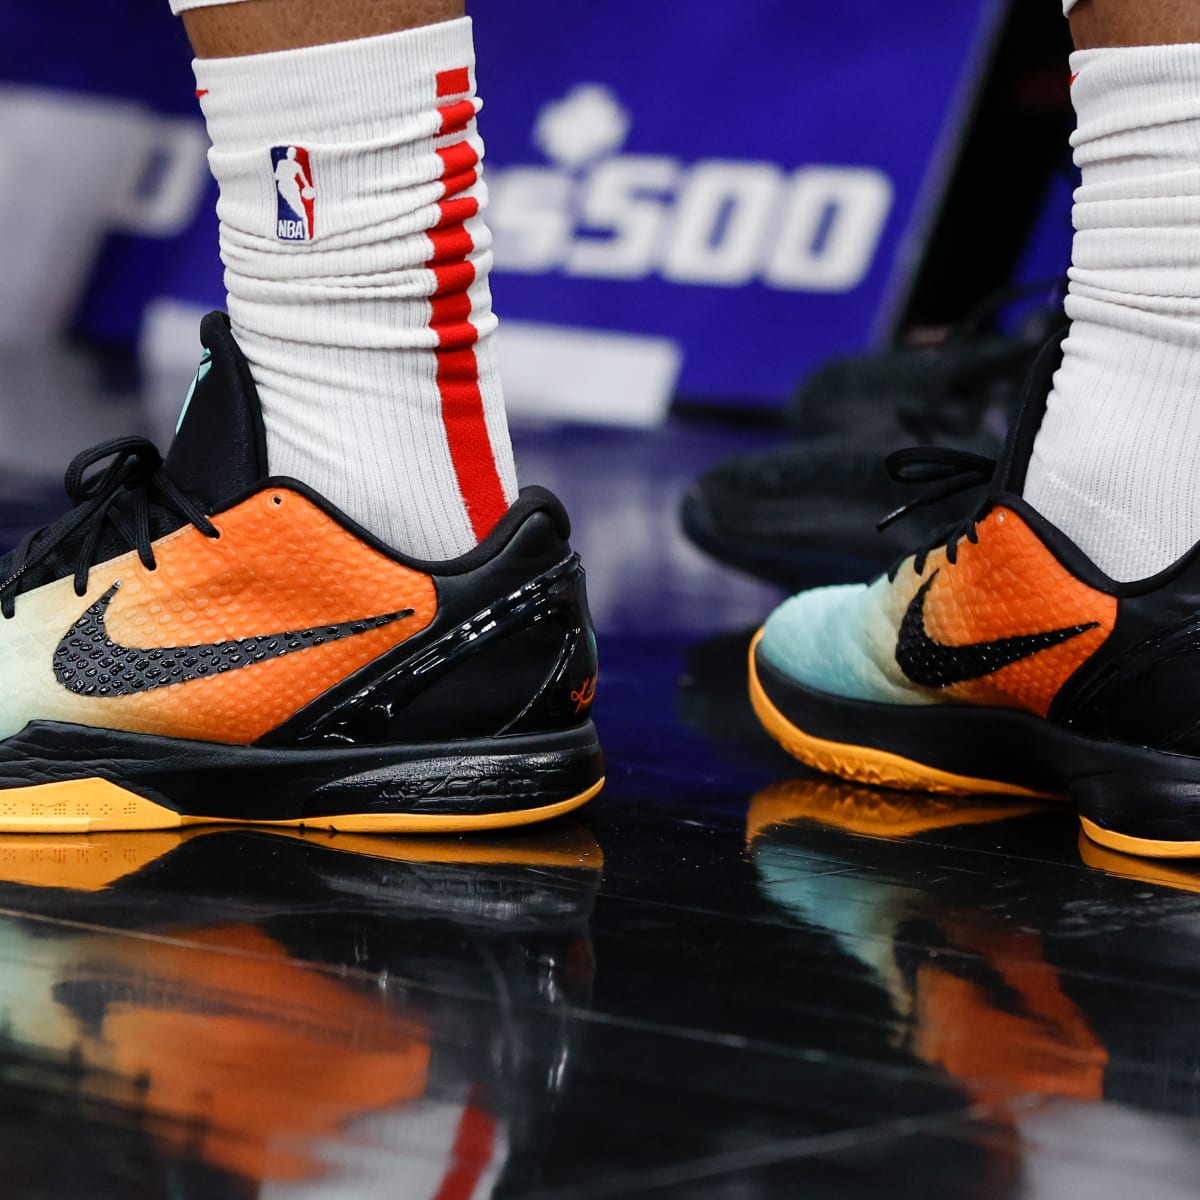 DeMar DeRozan Wears Never-Before-Seen Nike Kobe 6 Colorway - Sports  Illustrated FanNation Kicks News, Analysis and More